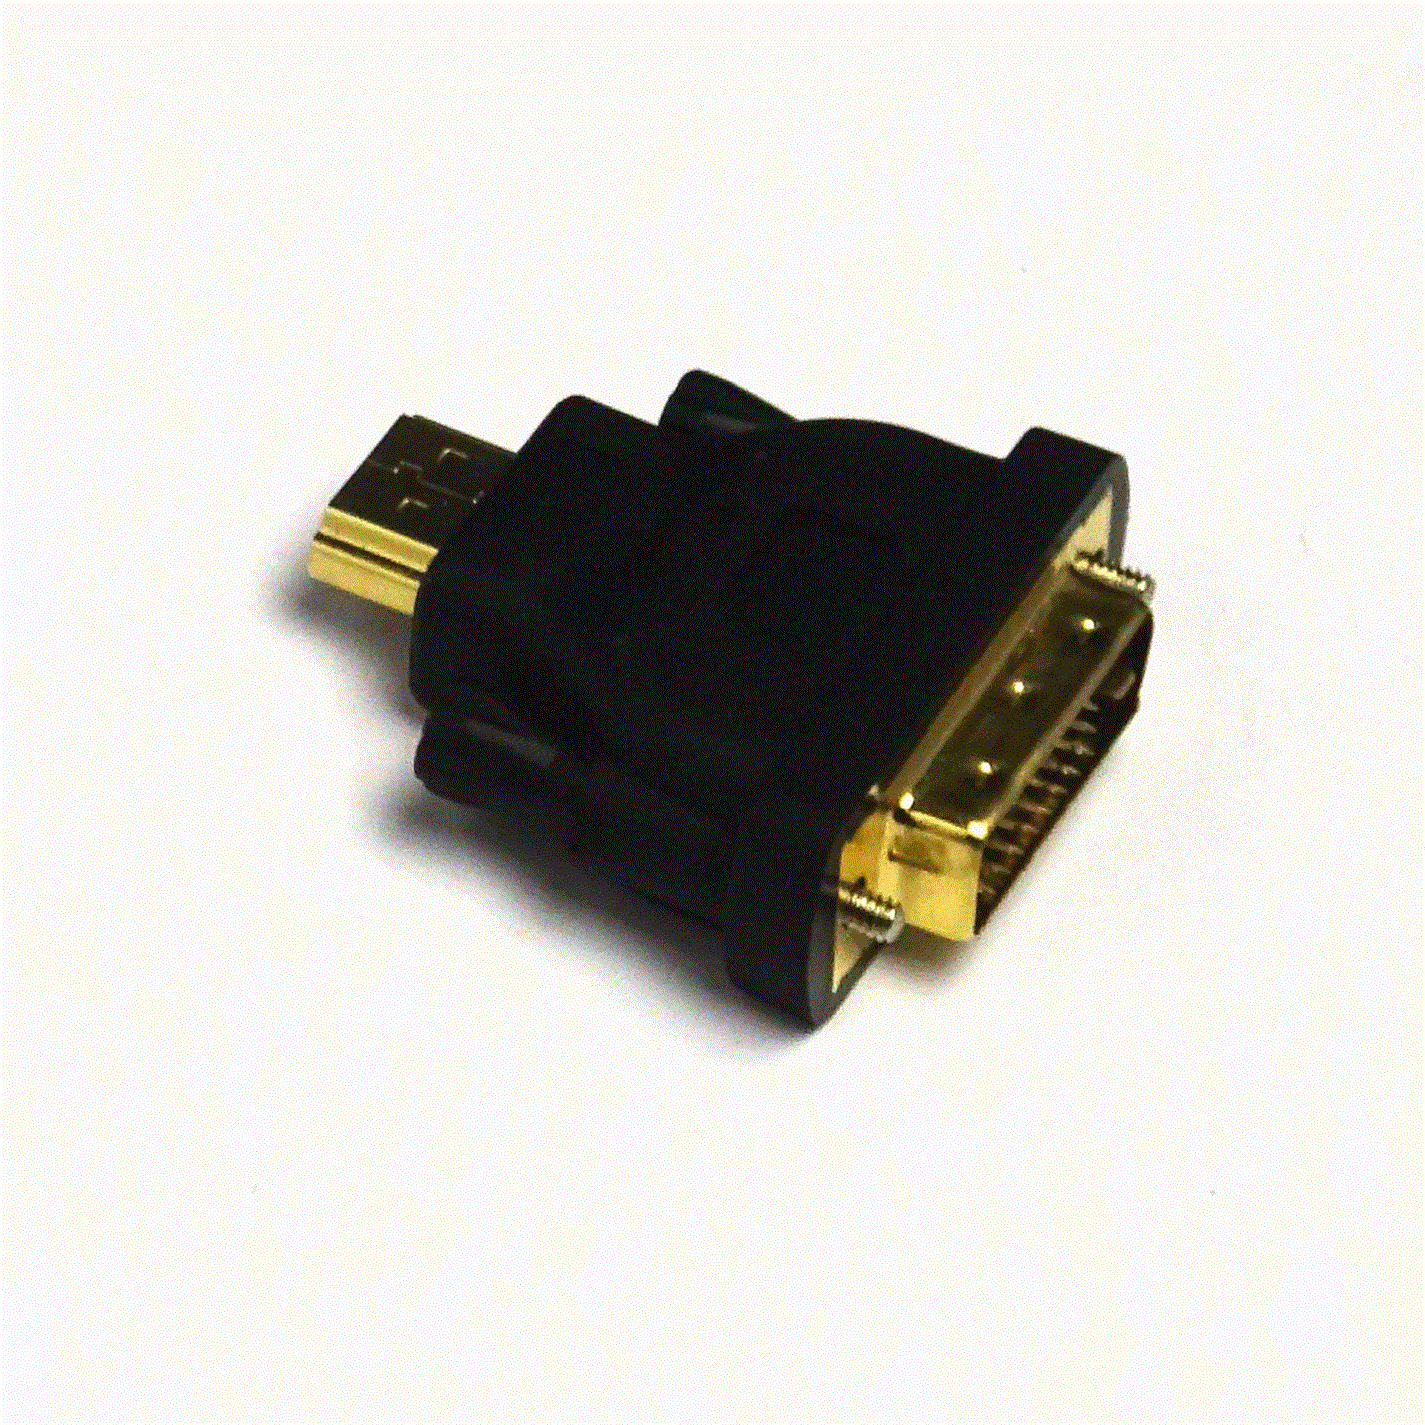 HDMI to DVI-D Male Converter Adaptor Gold Plated Gender Changer HDTV - UK Seller